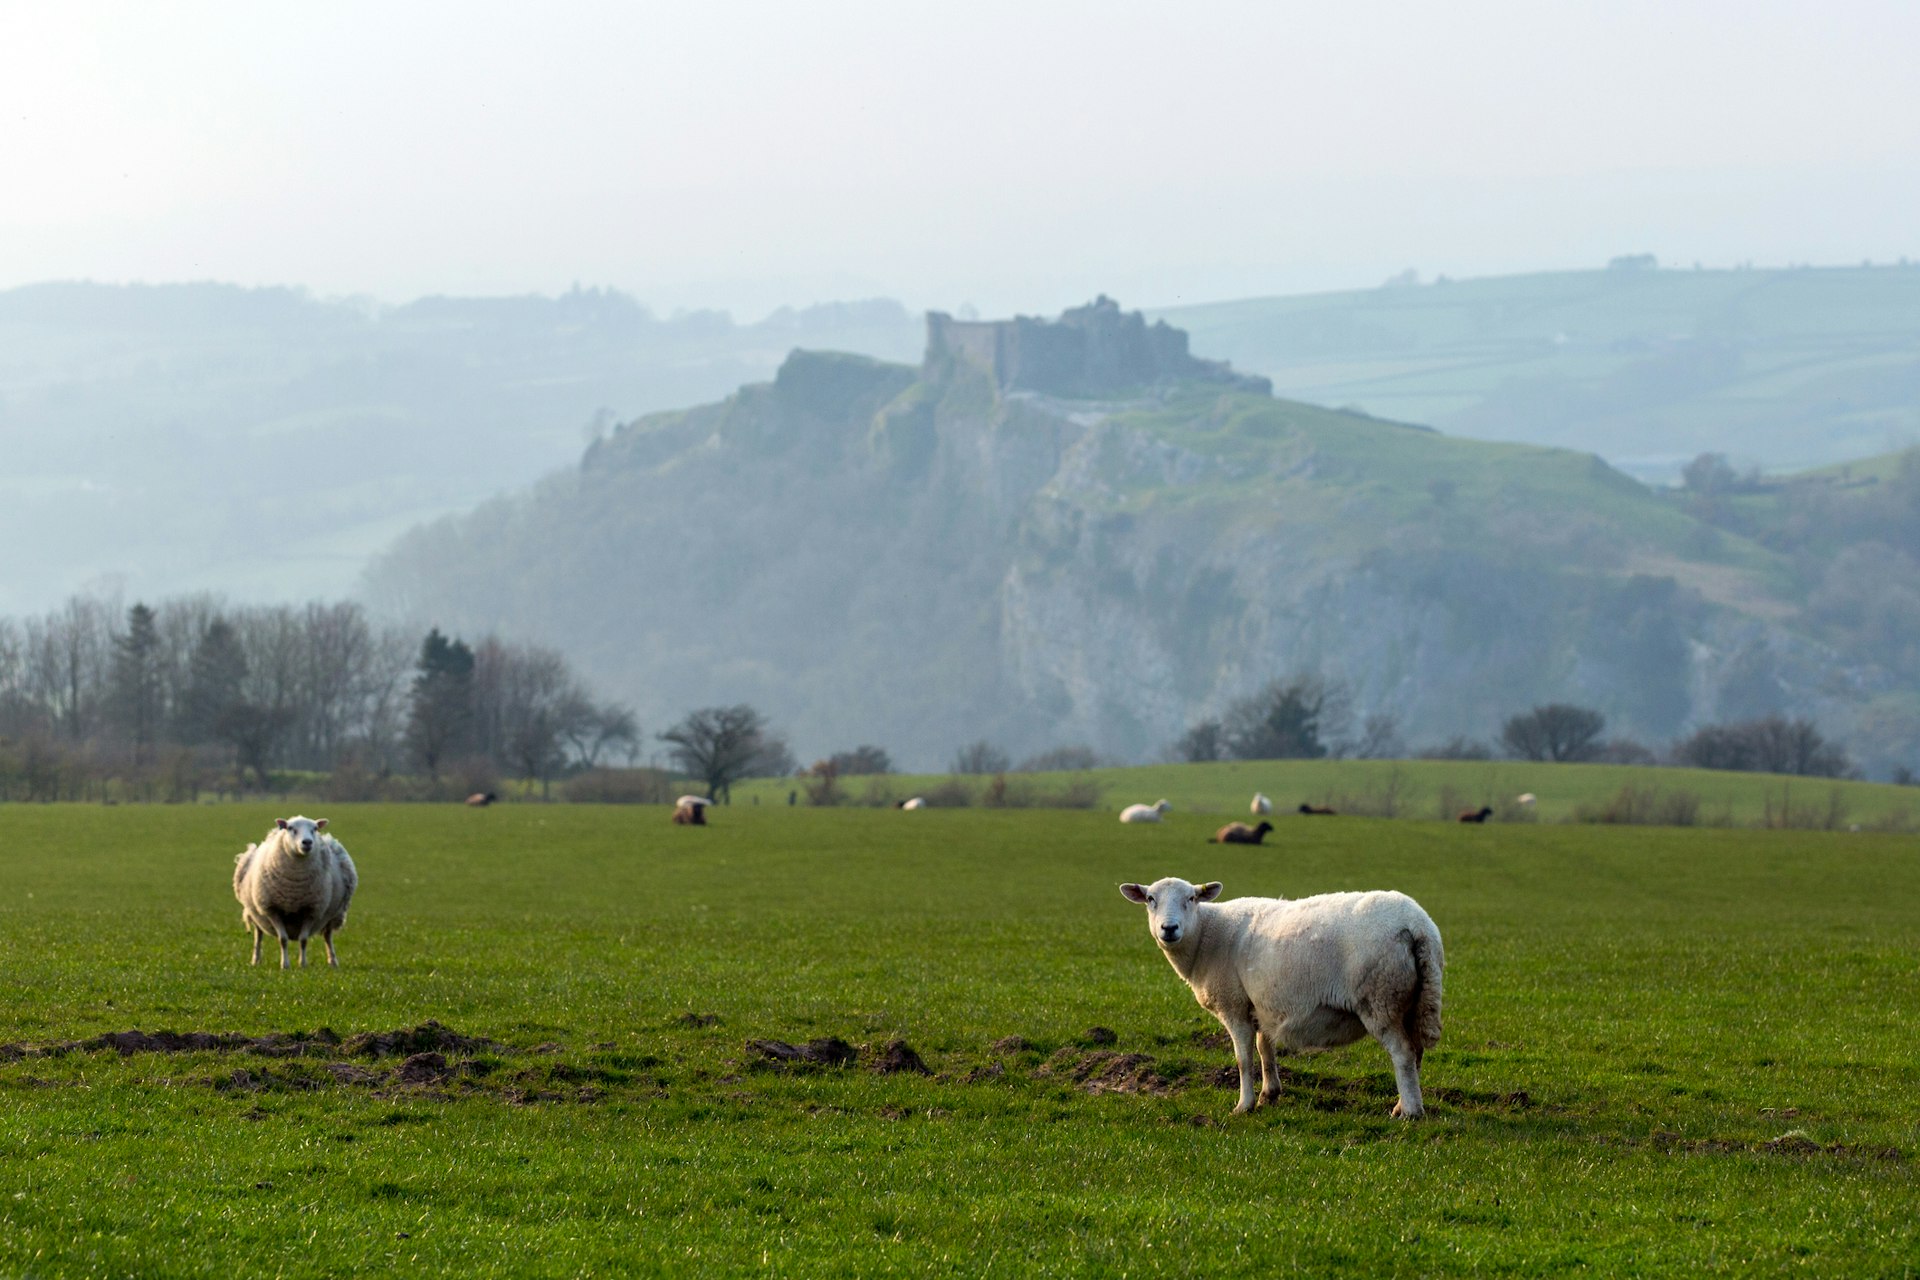 Scenic landscape with sheep grazing in front of Castell Carreg Cennen (Carreg Cennen Castle), Trapp, Llandeilo, Carmarthenshire, Wales, 